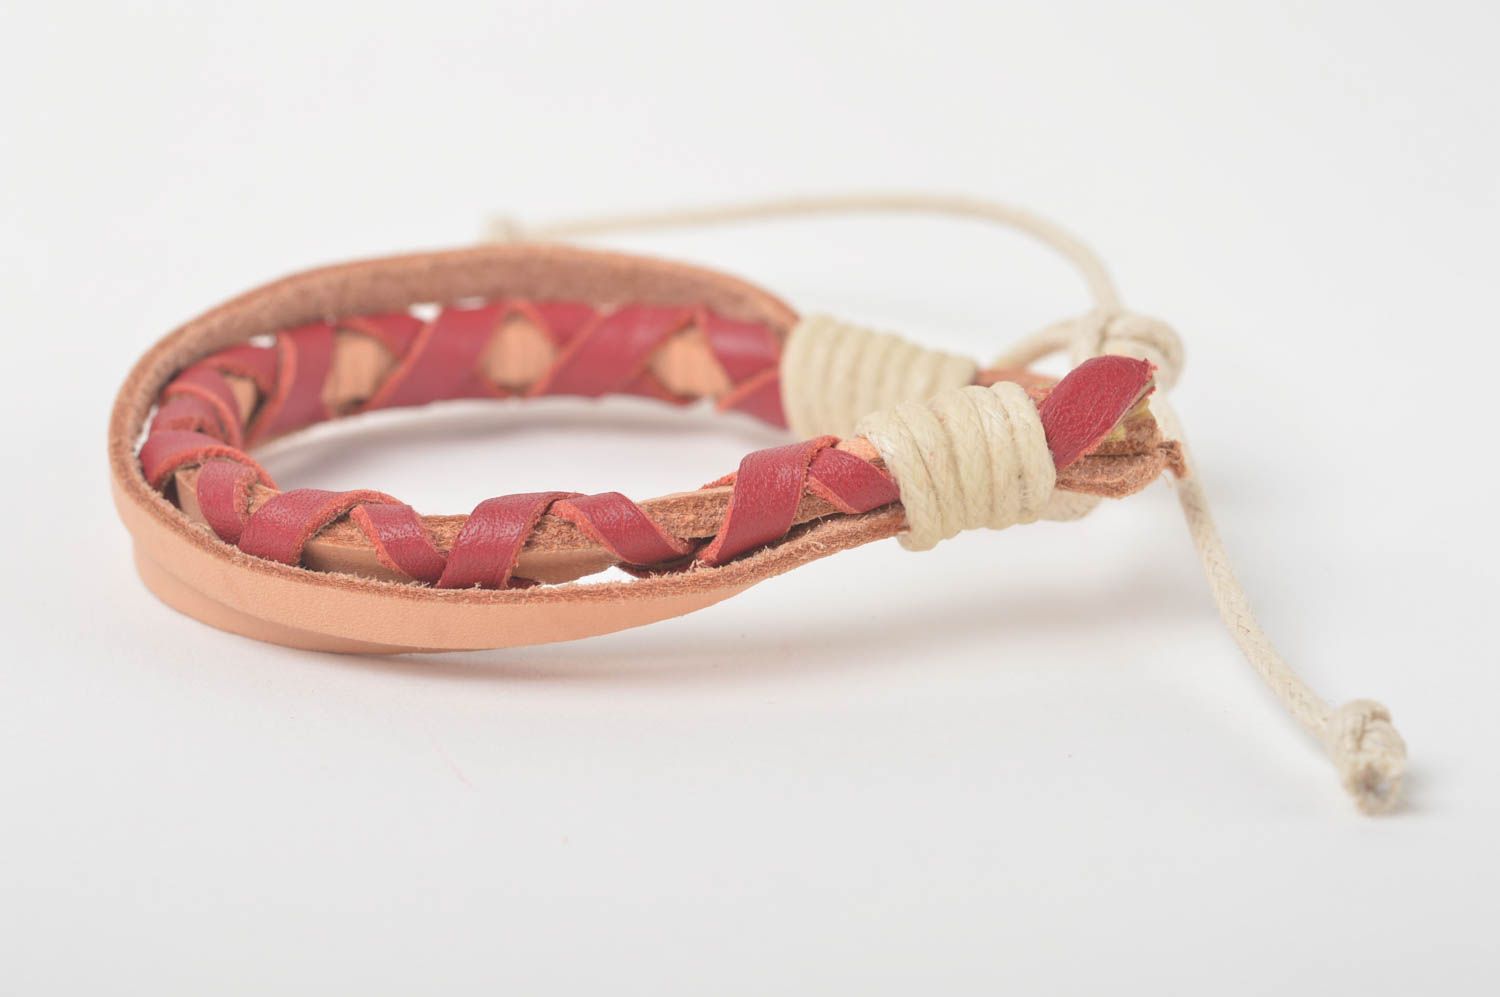 Stylish handmade leather bracelet designs leather goods cool jewelry photo 5